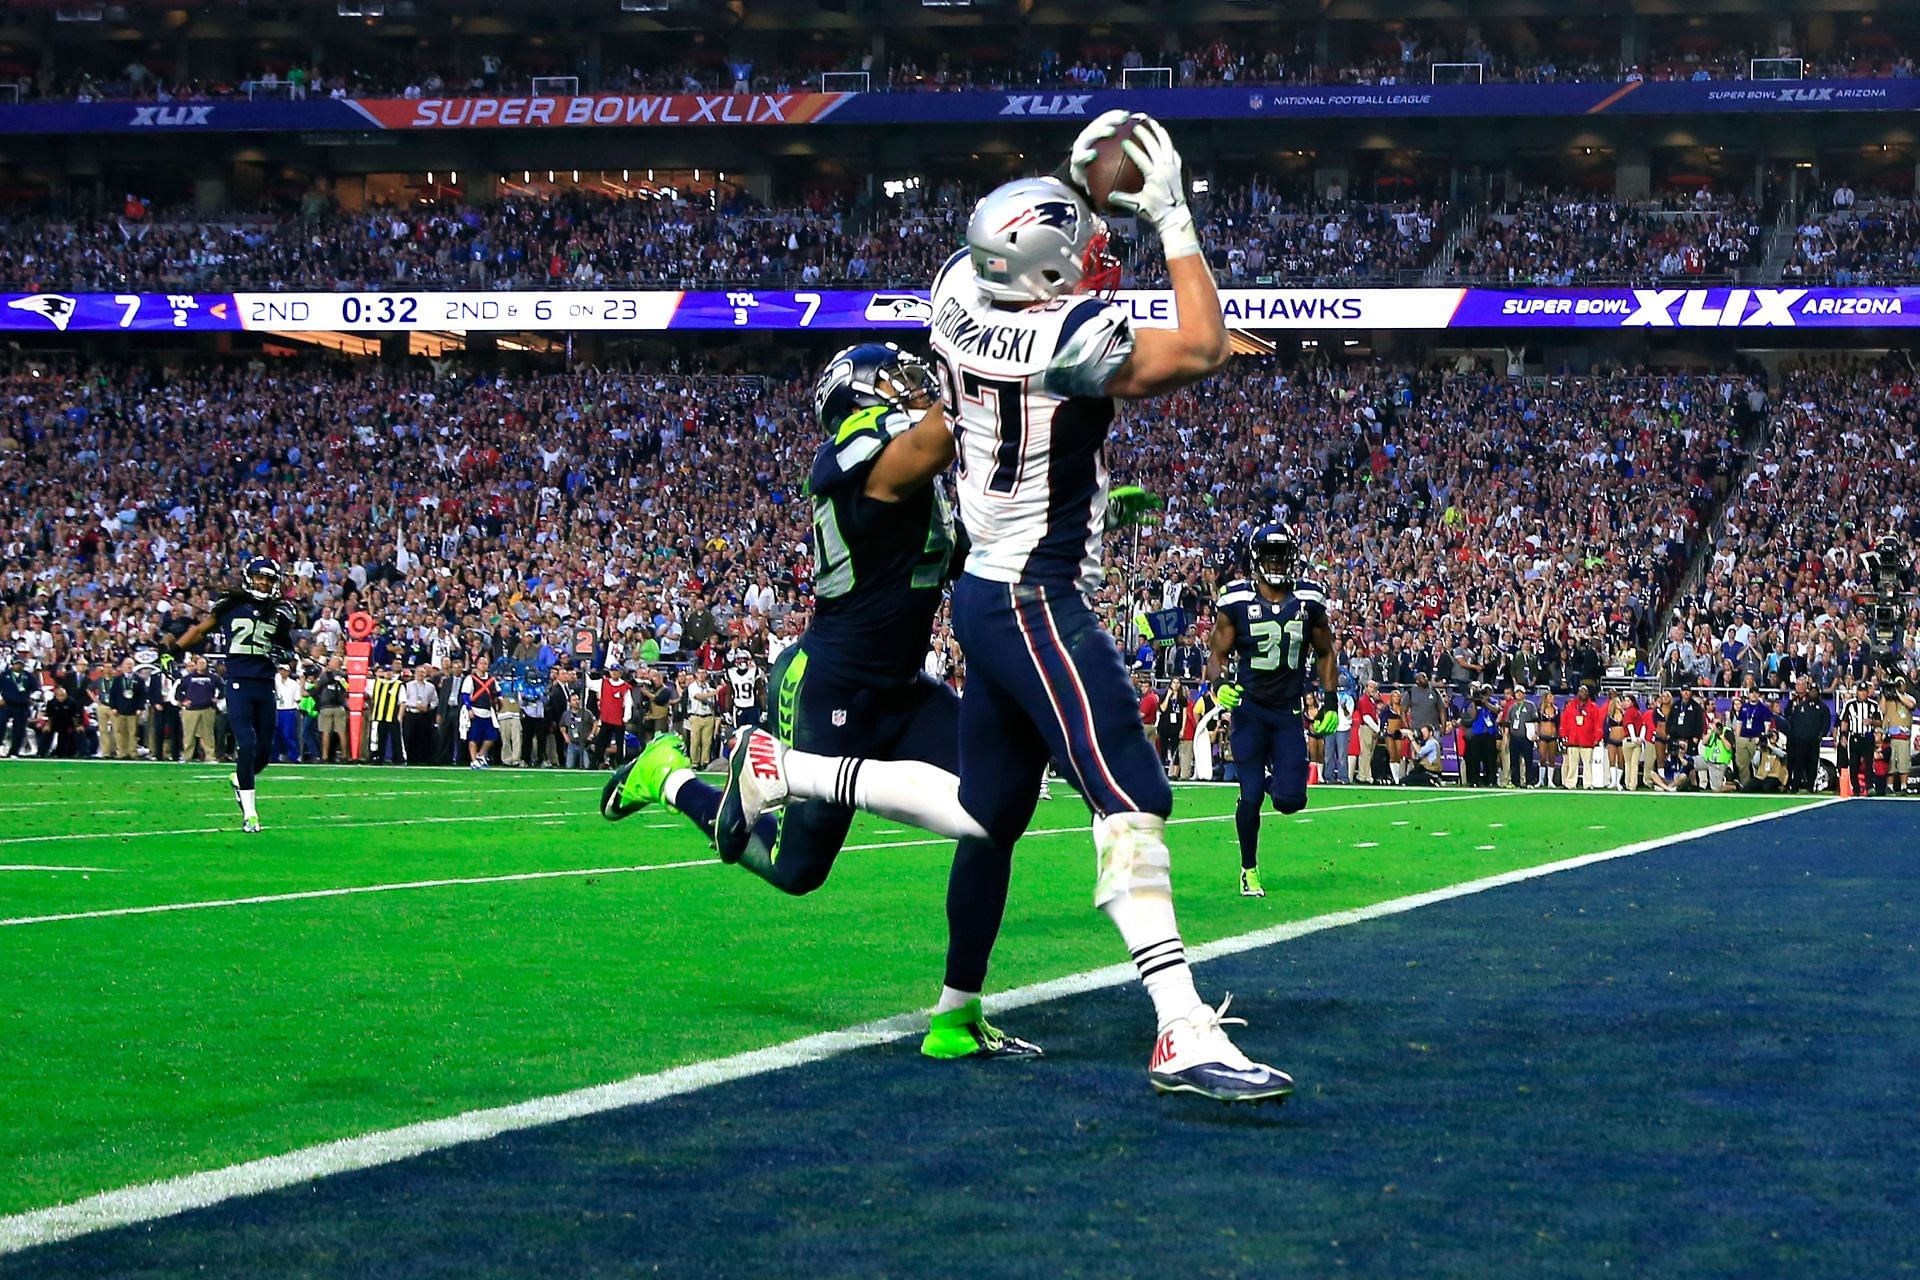 Gronkowski catches a touchdown in Super Bowl XLIX